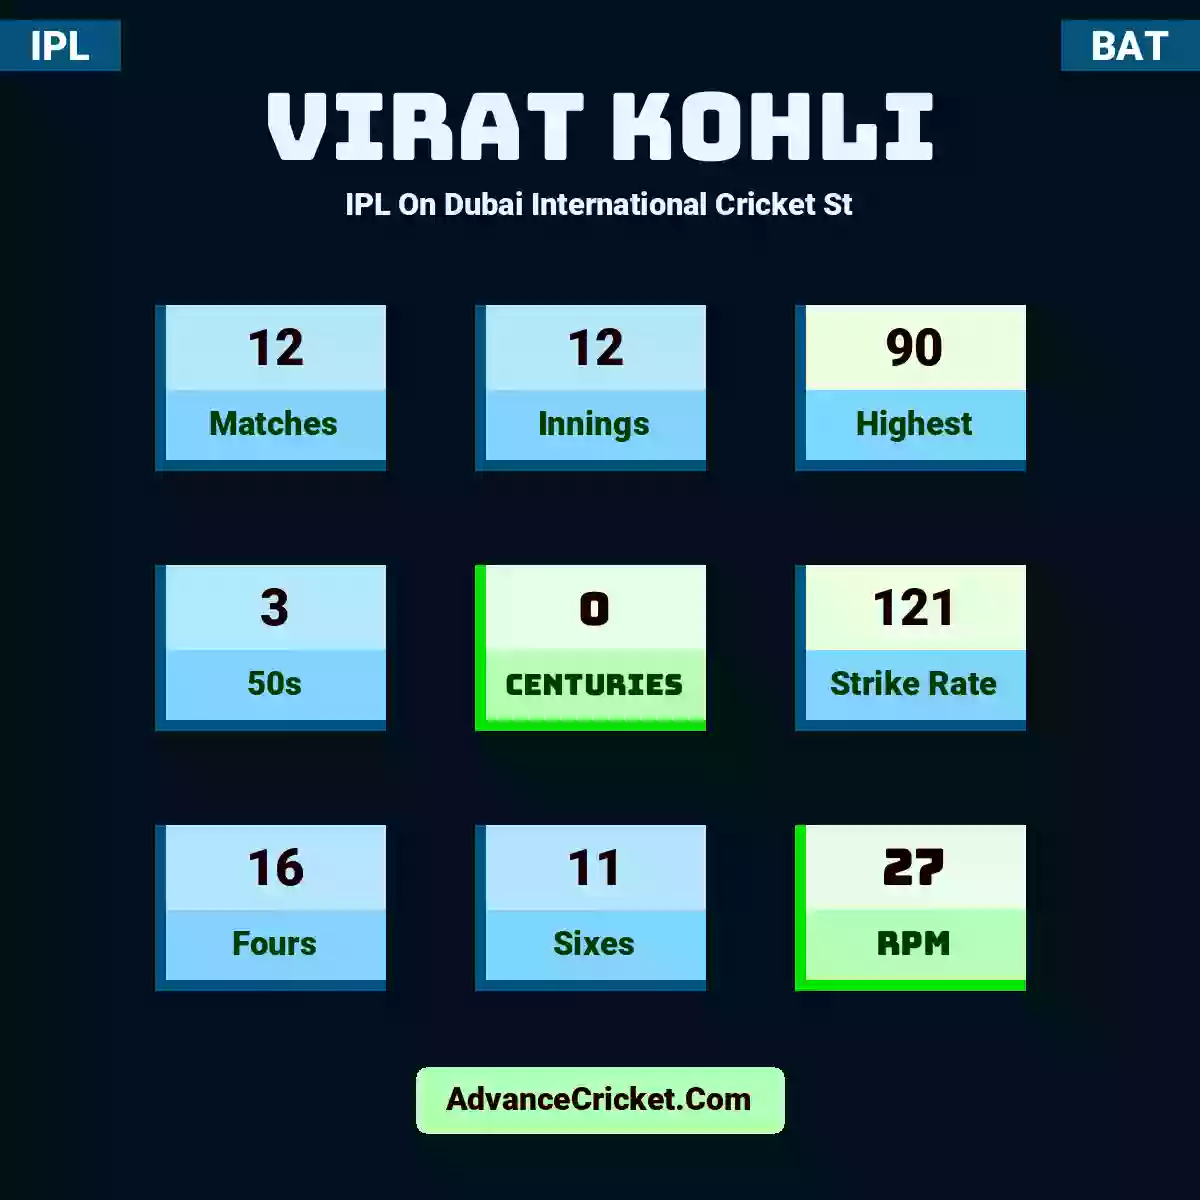 Virat Kohli IPL  On Dubai International Cricket St, Virat Kohli played 12 matches, scored 90 runs as highest, 3 half-centuries, and 0 centuries, with a strike rate of 121. V.Kohli hit 16 fours and 11 sixes, with an RPM of 27.